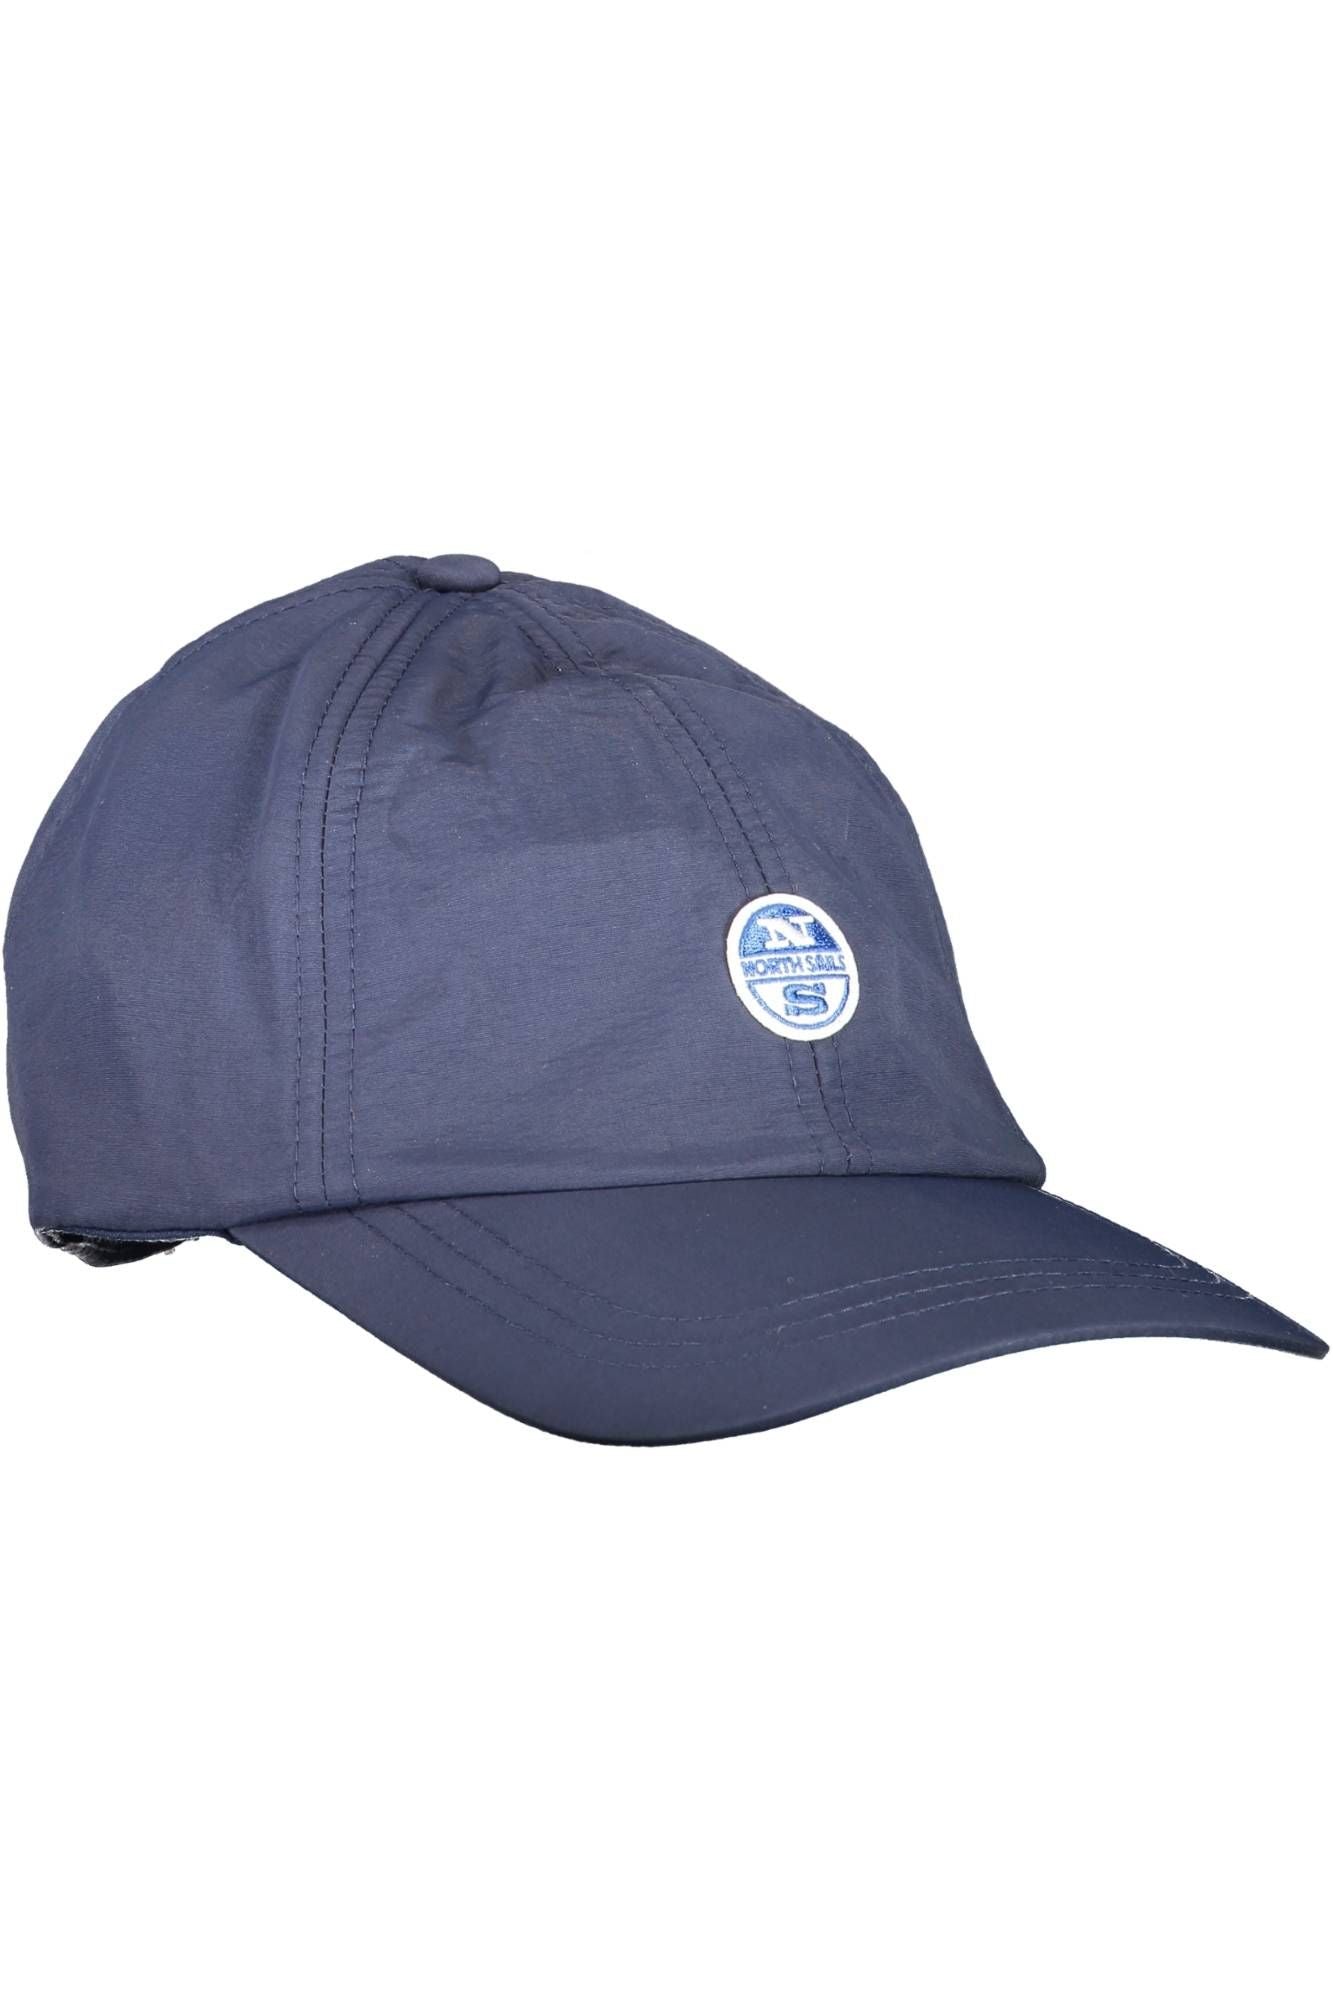 Sleek Blue Visor Cap with Signature Logo